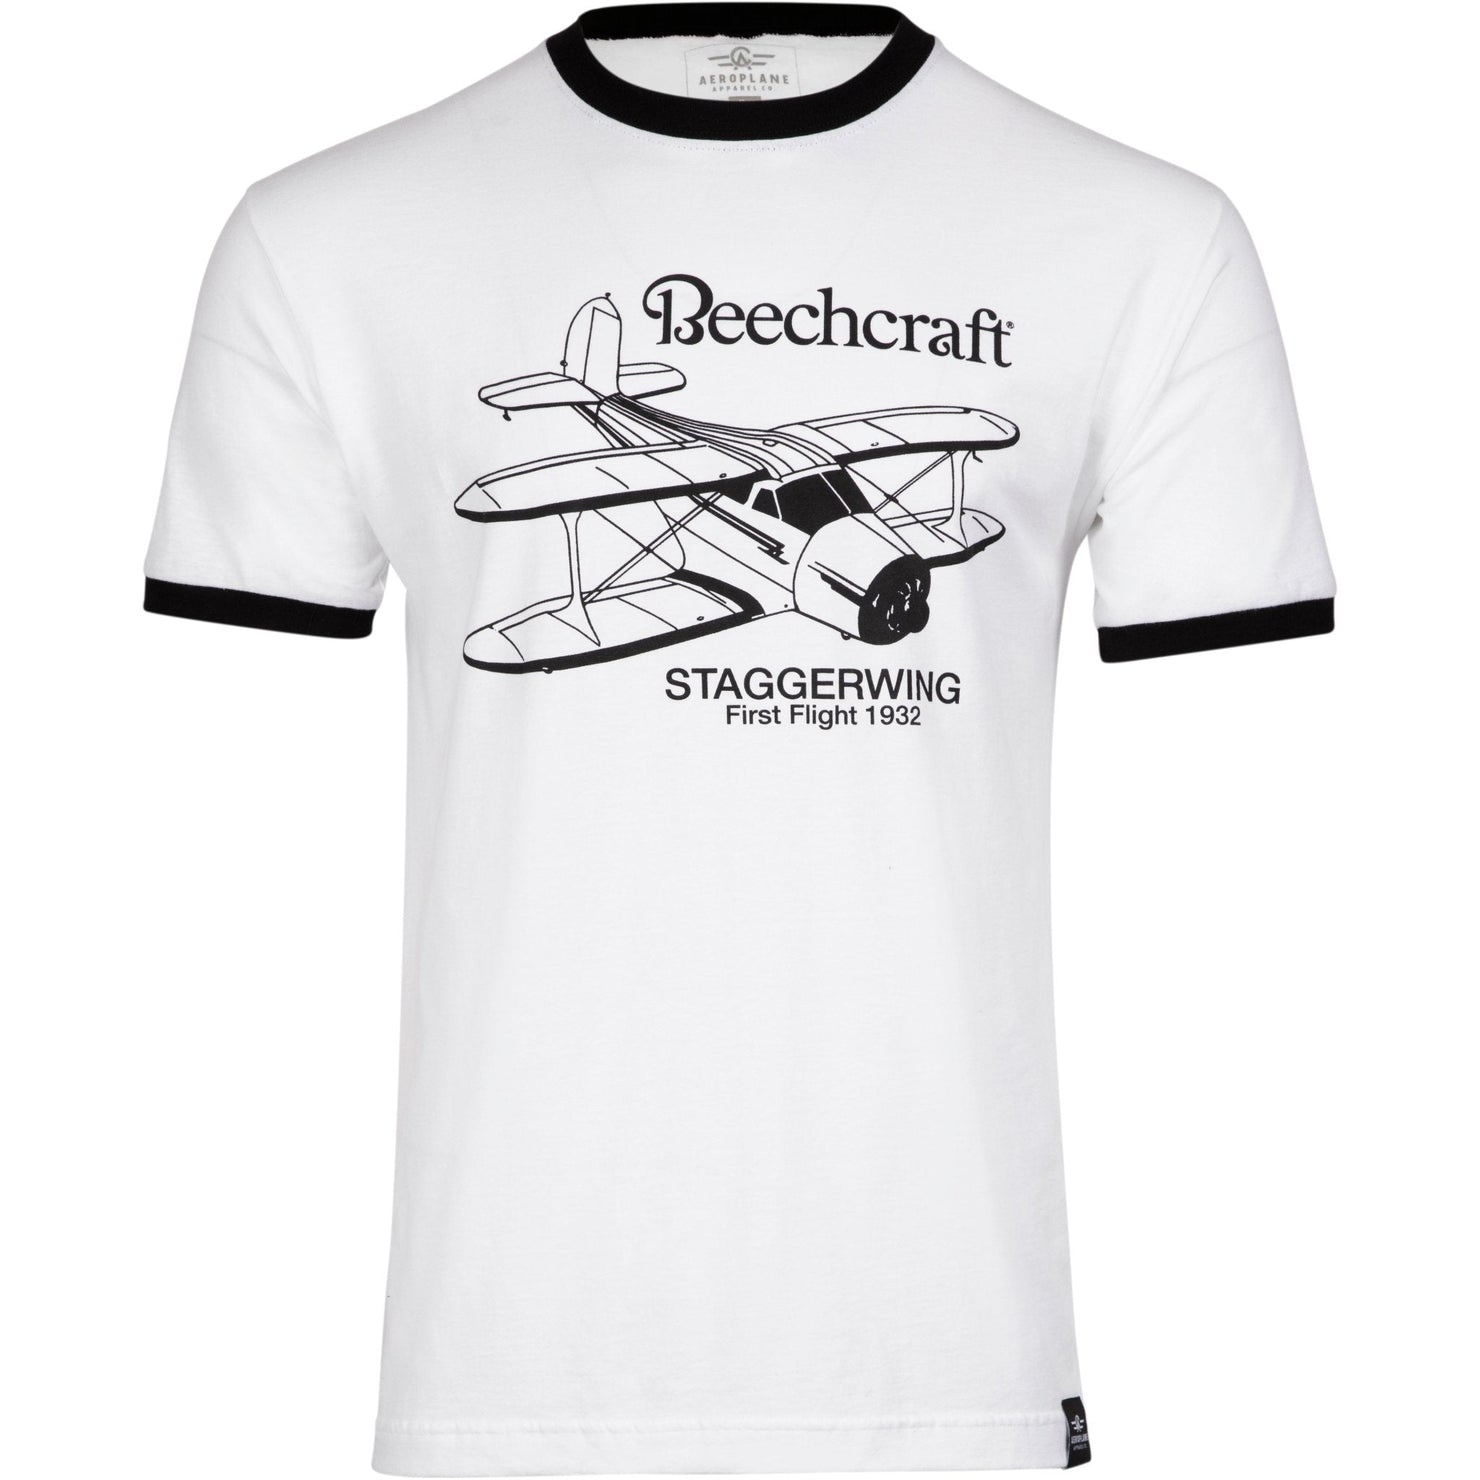 Beechcraft Throwback Officially Licensed Ringer T-Shirt - PilotMall.com